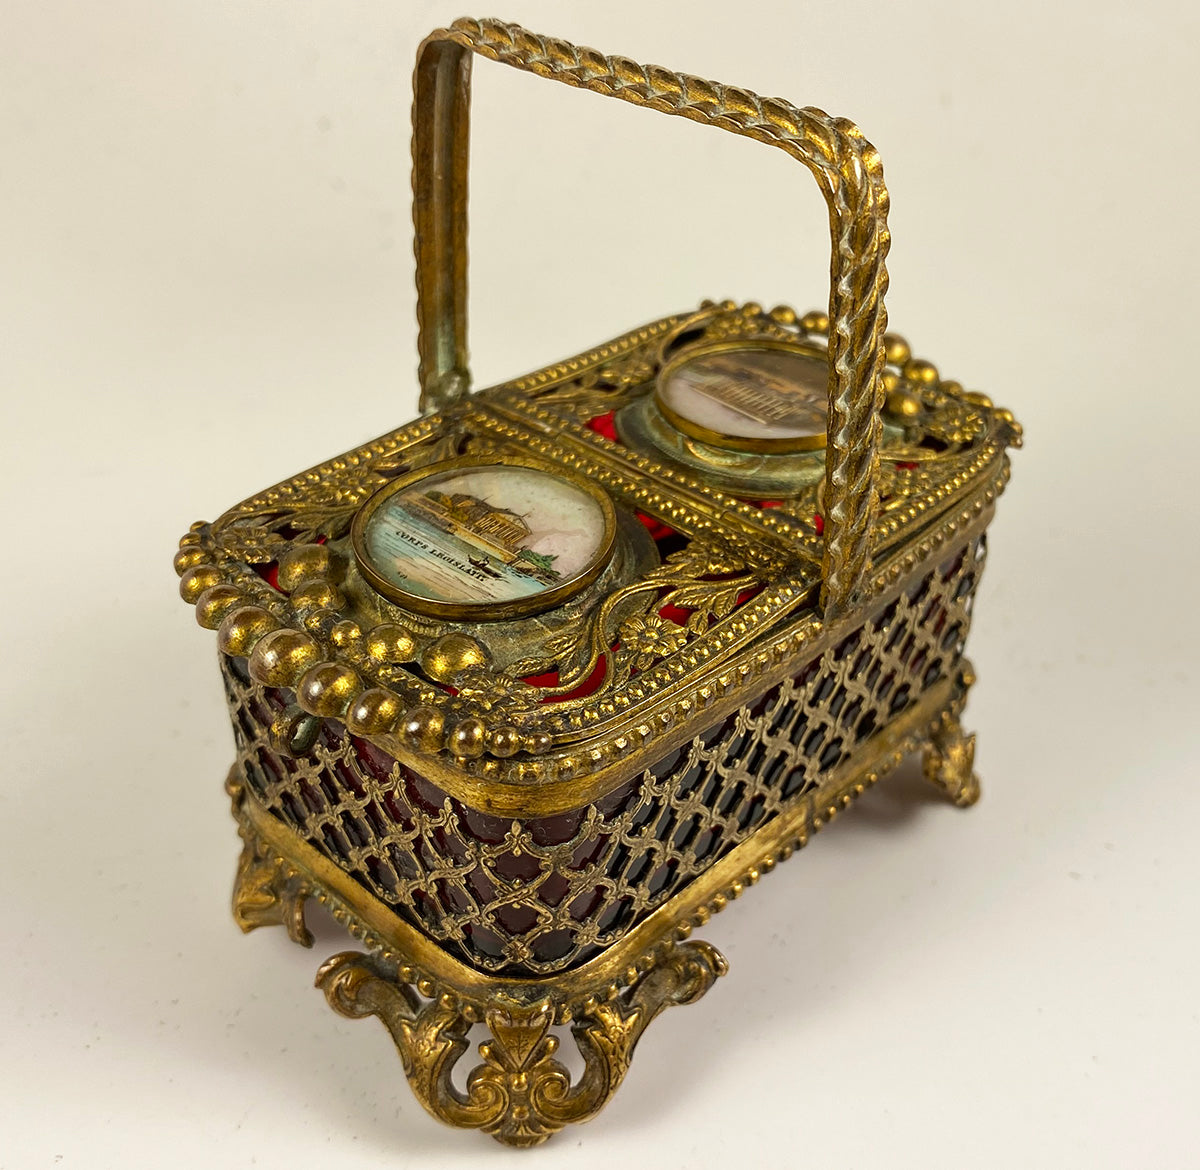 Superb c.1830-50 French Eglomise Grand Tour Souvenir Basket, 2 Views, Cranberry Glass